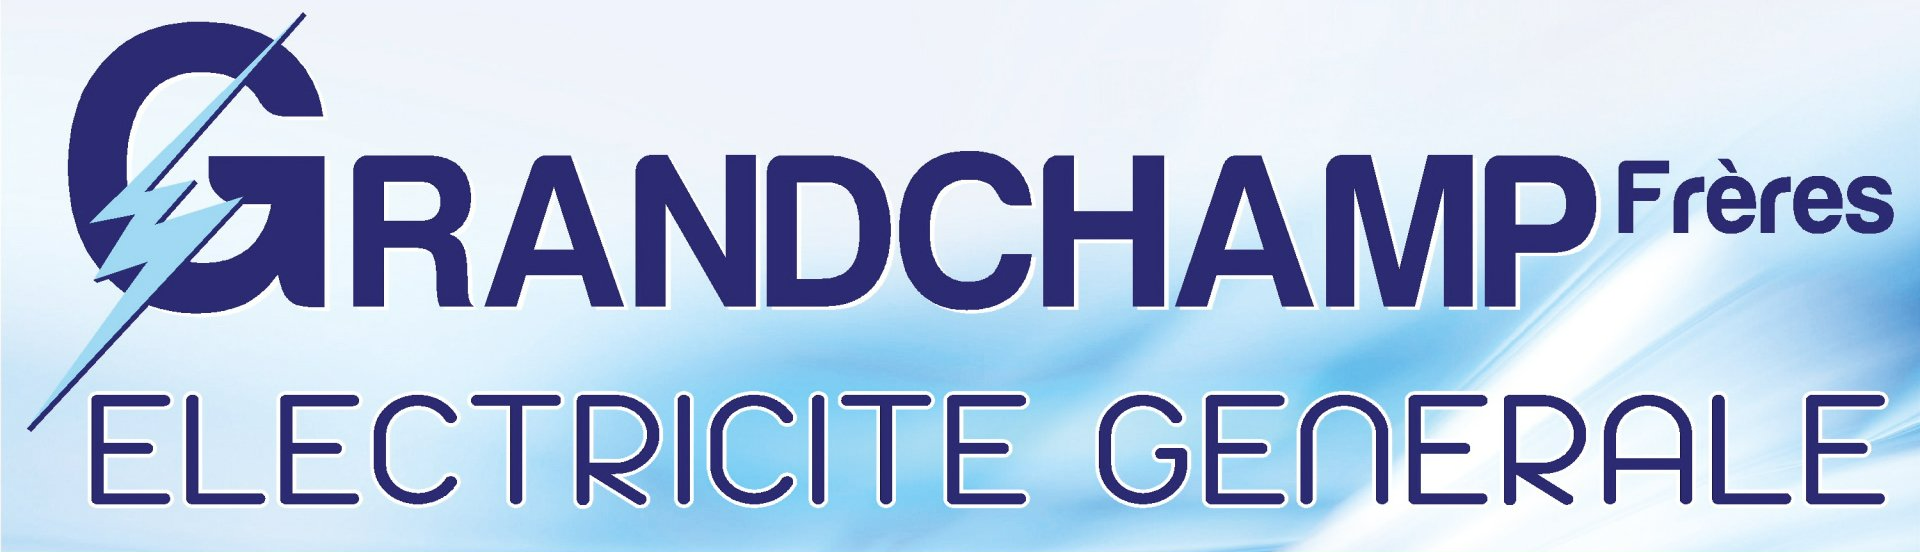 Grandchamp Frères logo